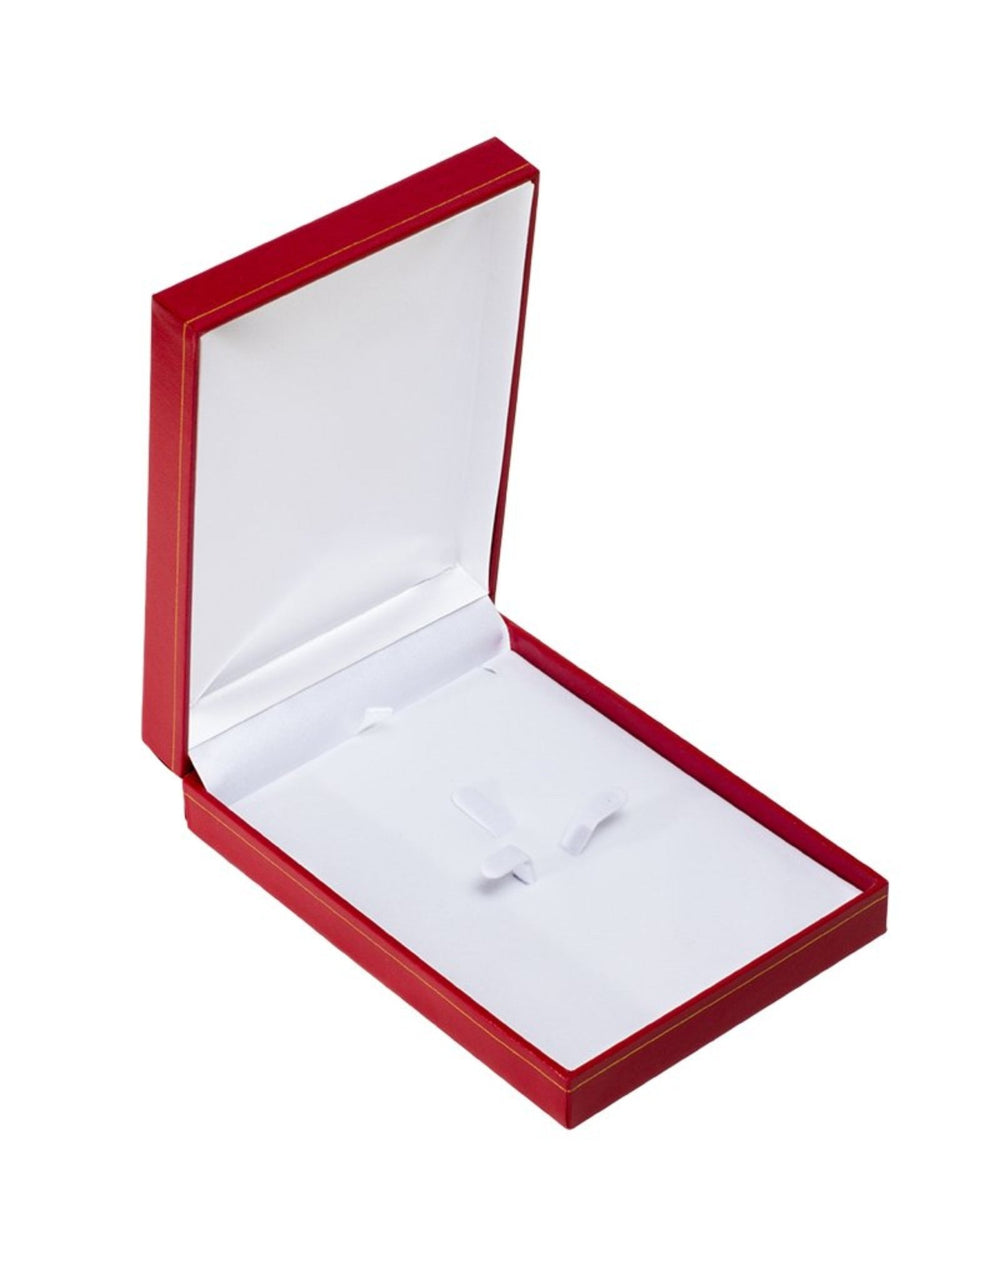 Leatherette Set Box Medium Red - BOX FOR BRITAIN